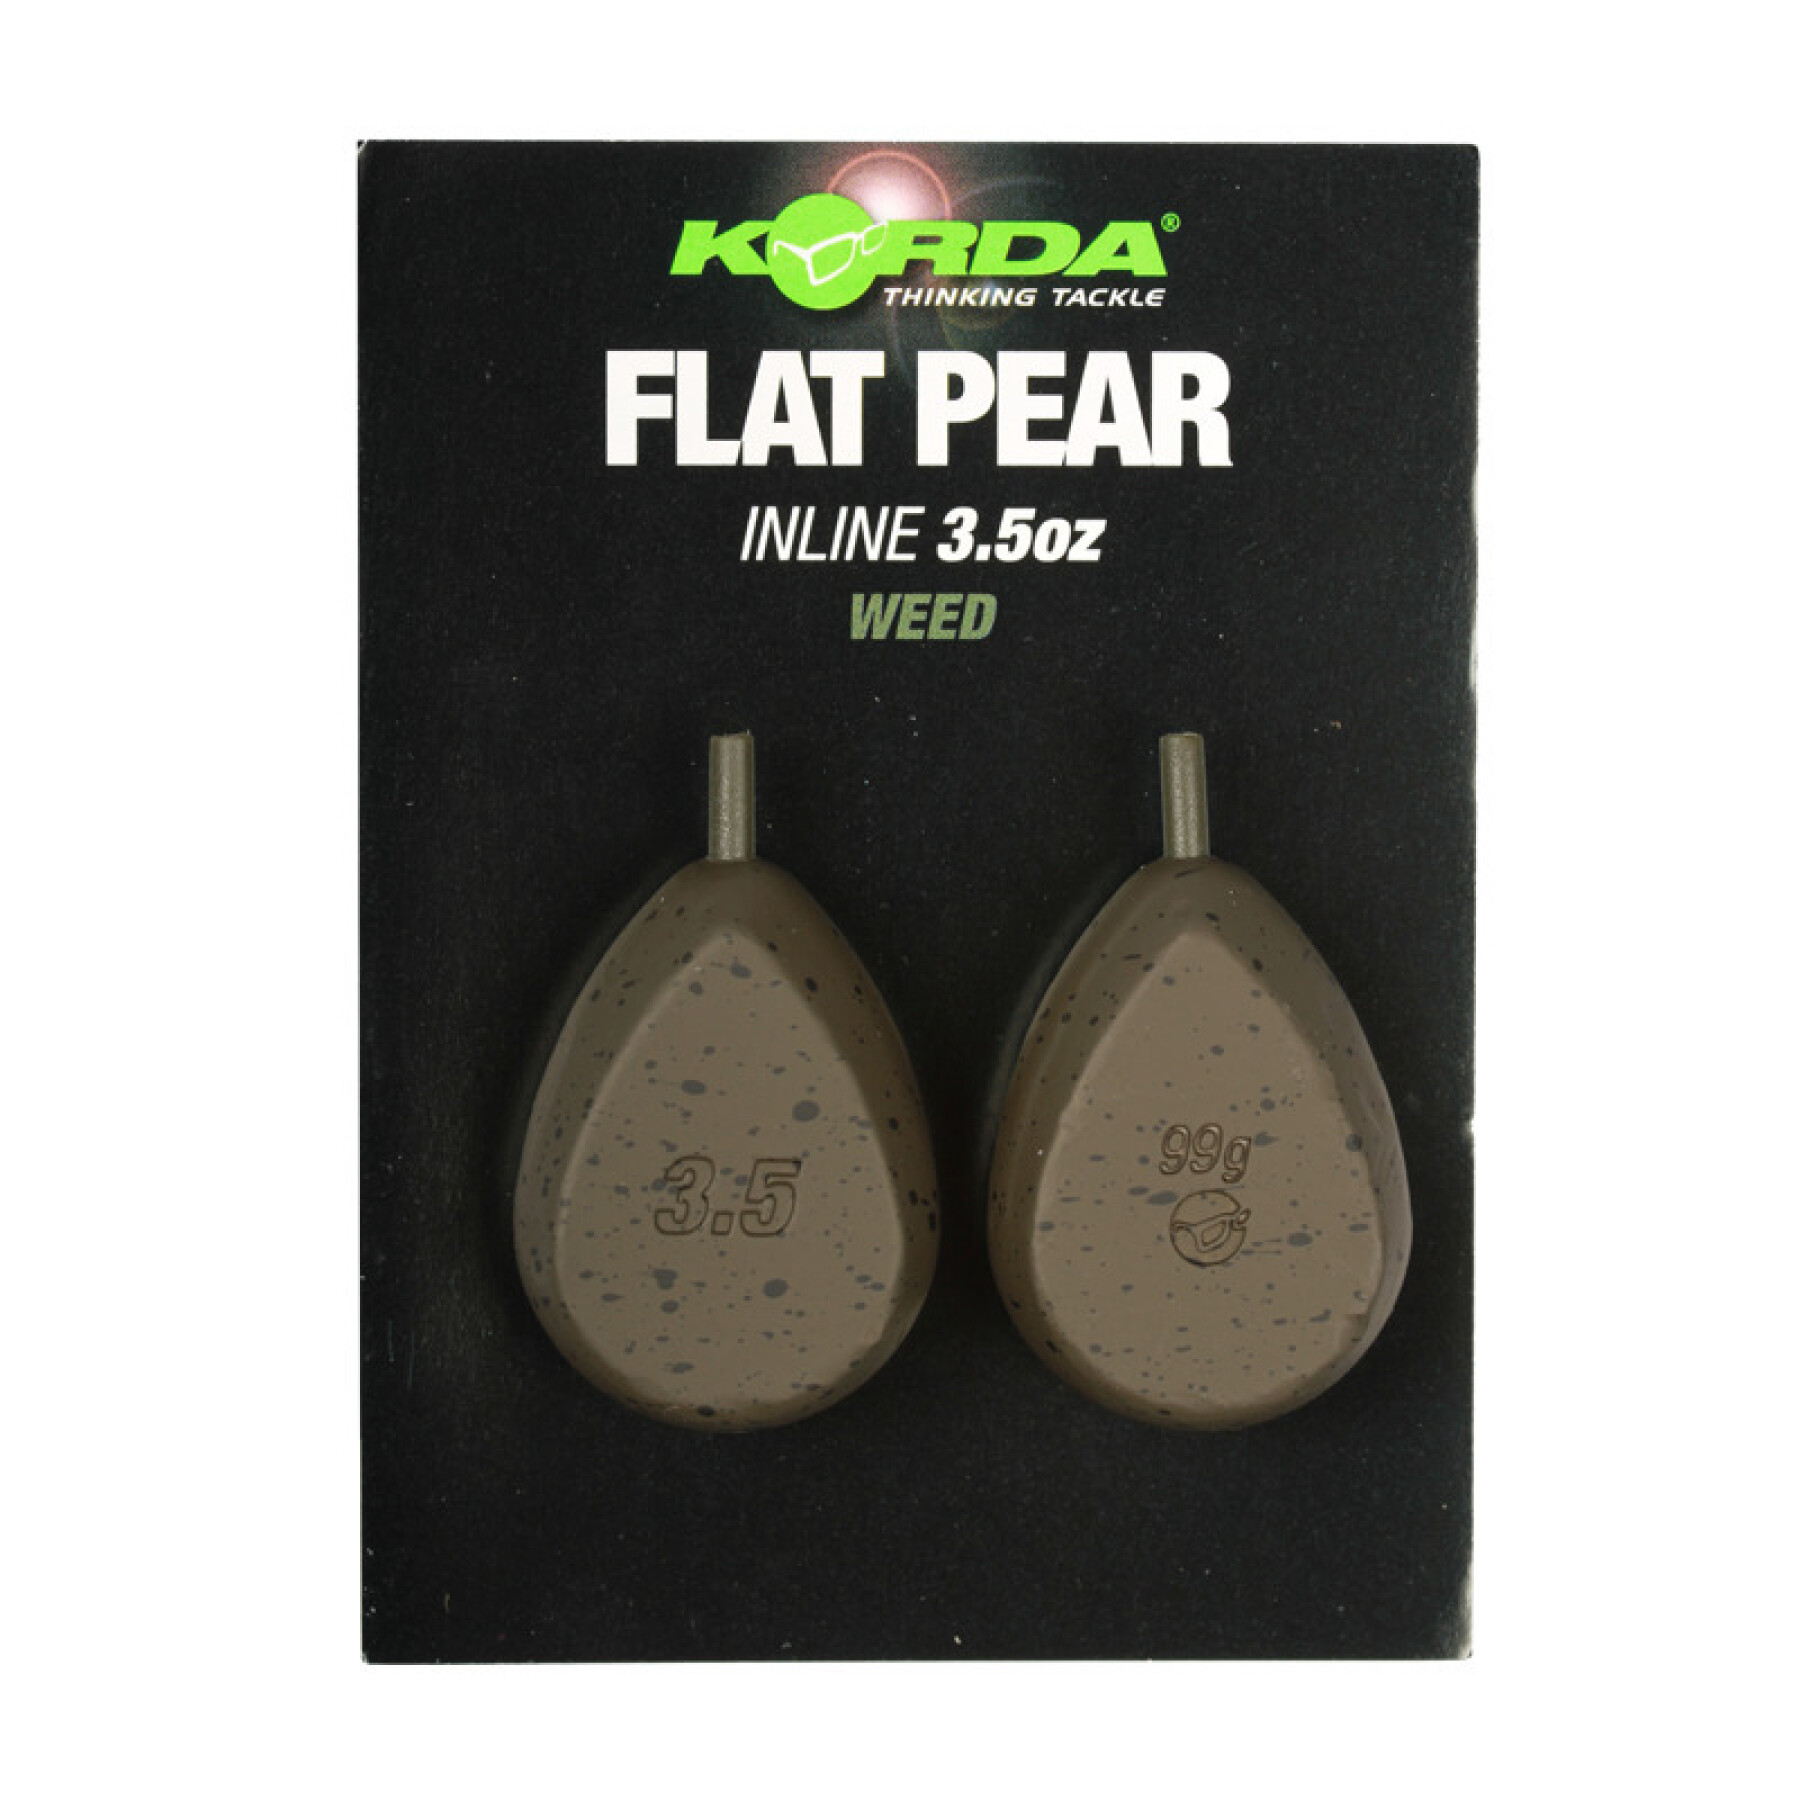 Flatliner pear inline 2oz